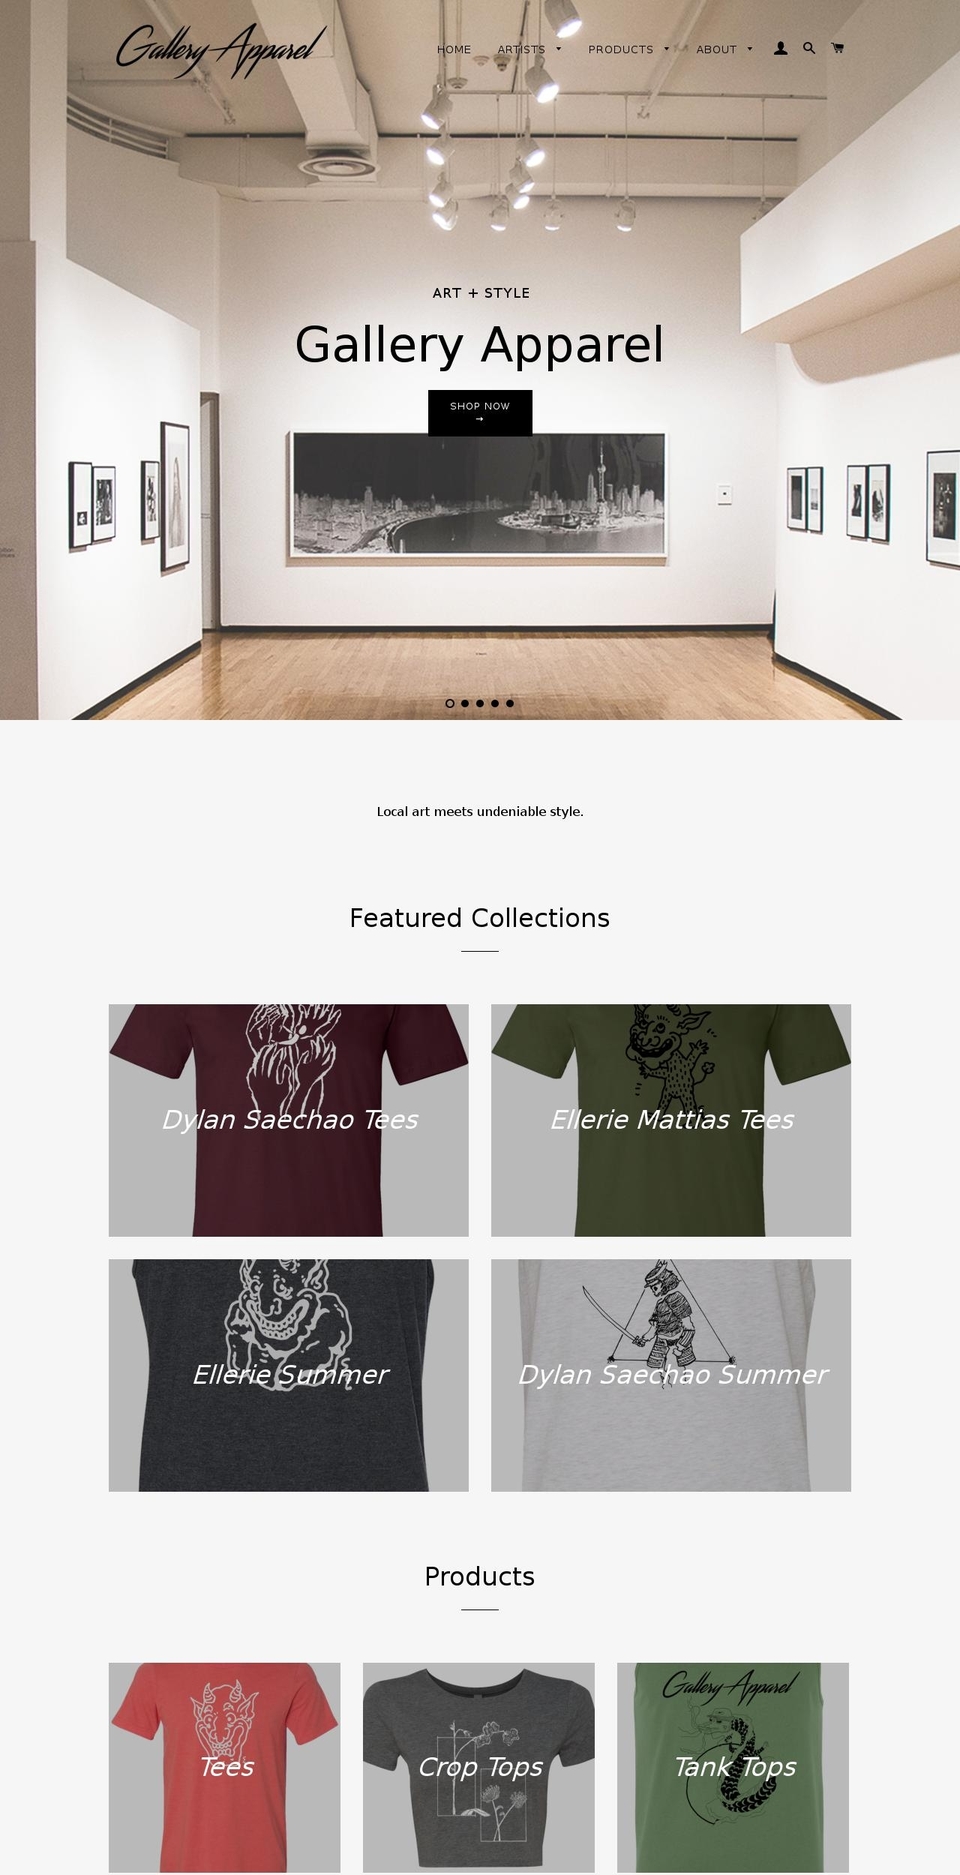 galleryapparel.clothing shopify website screenshot